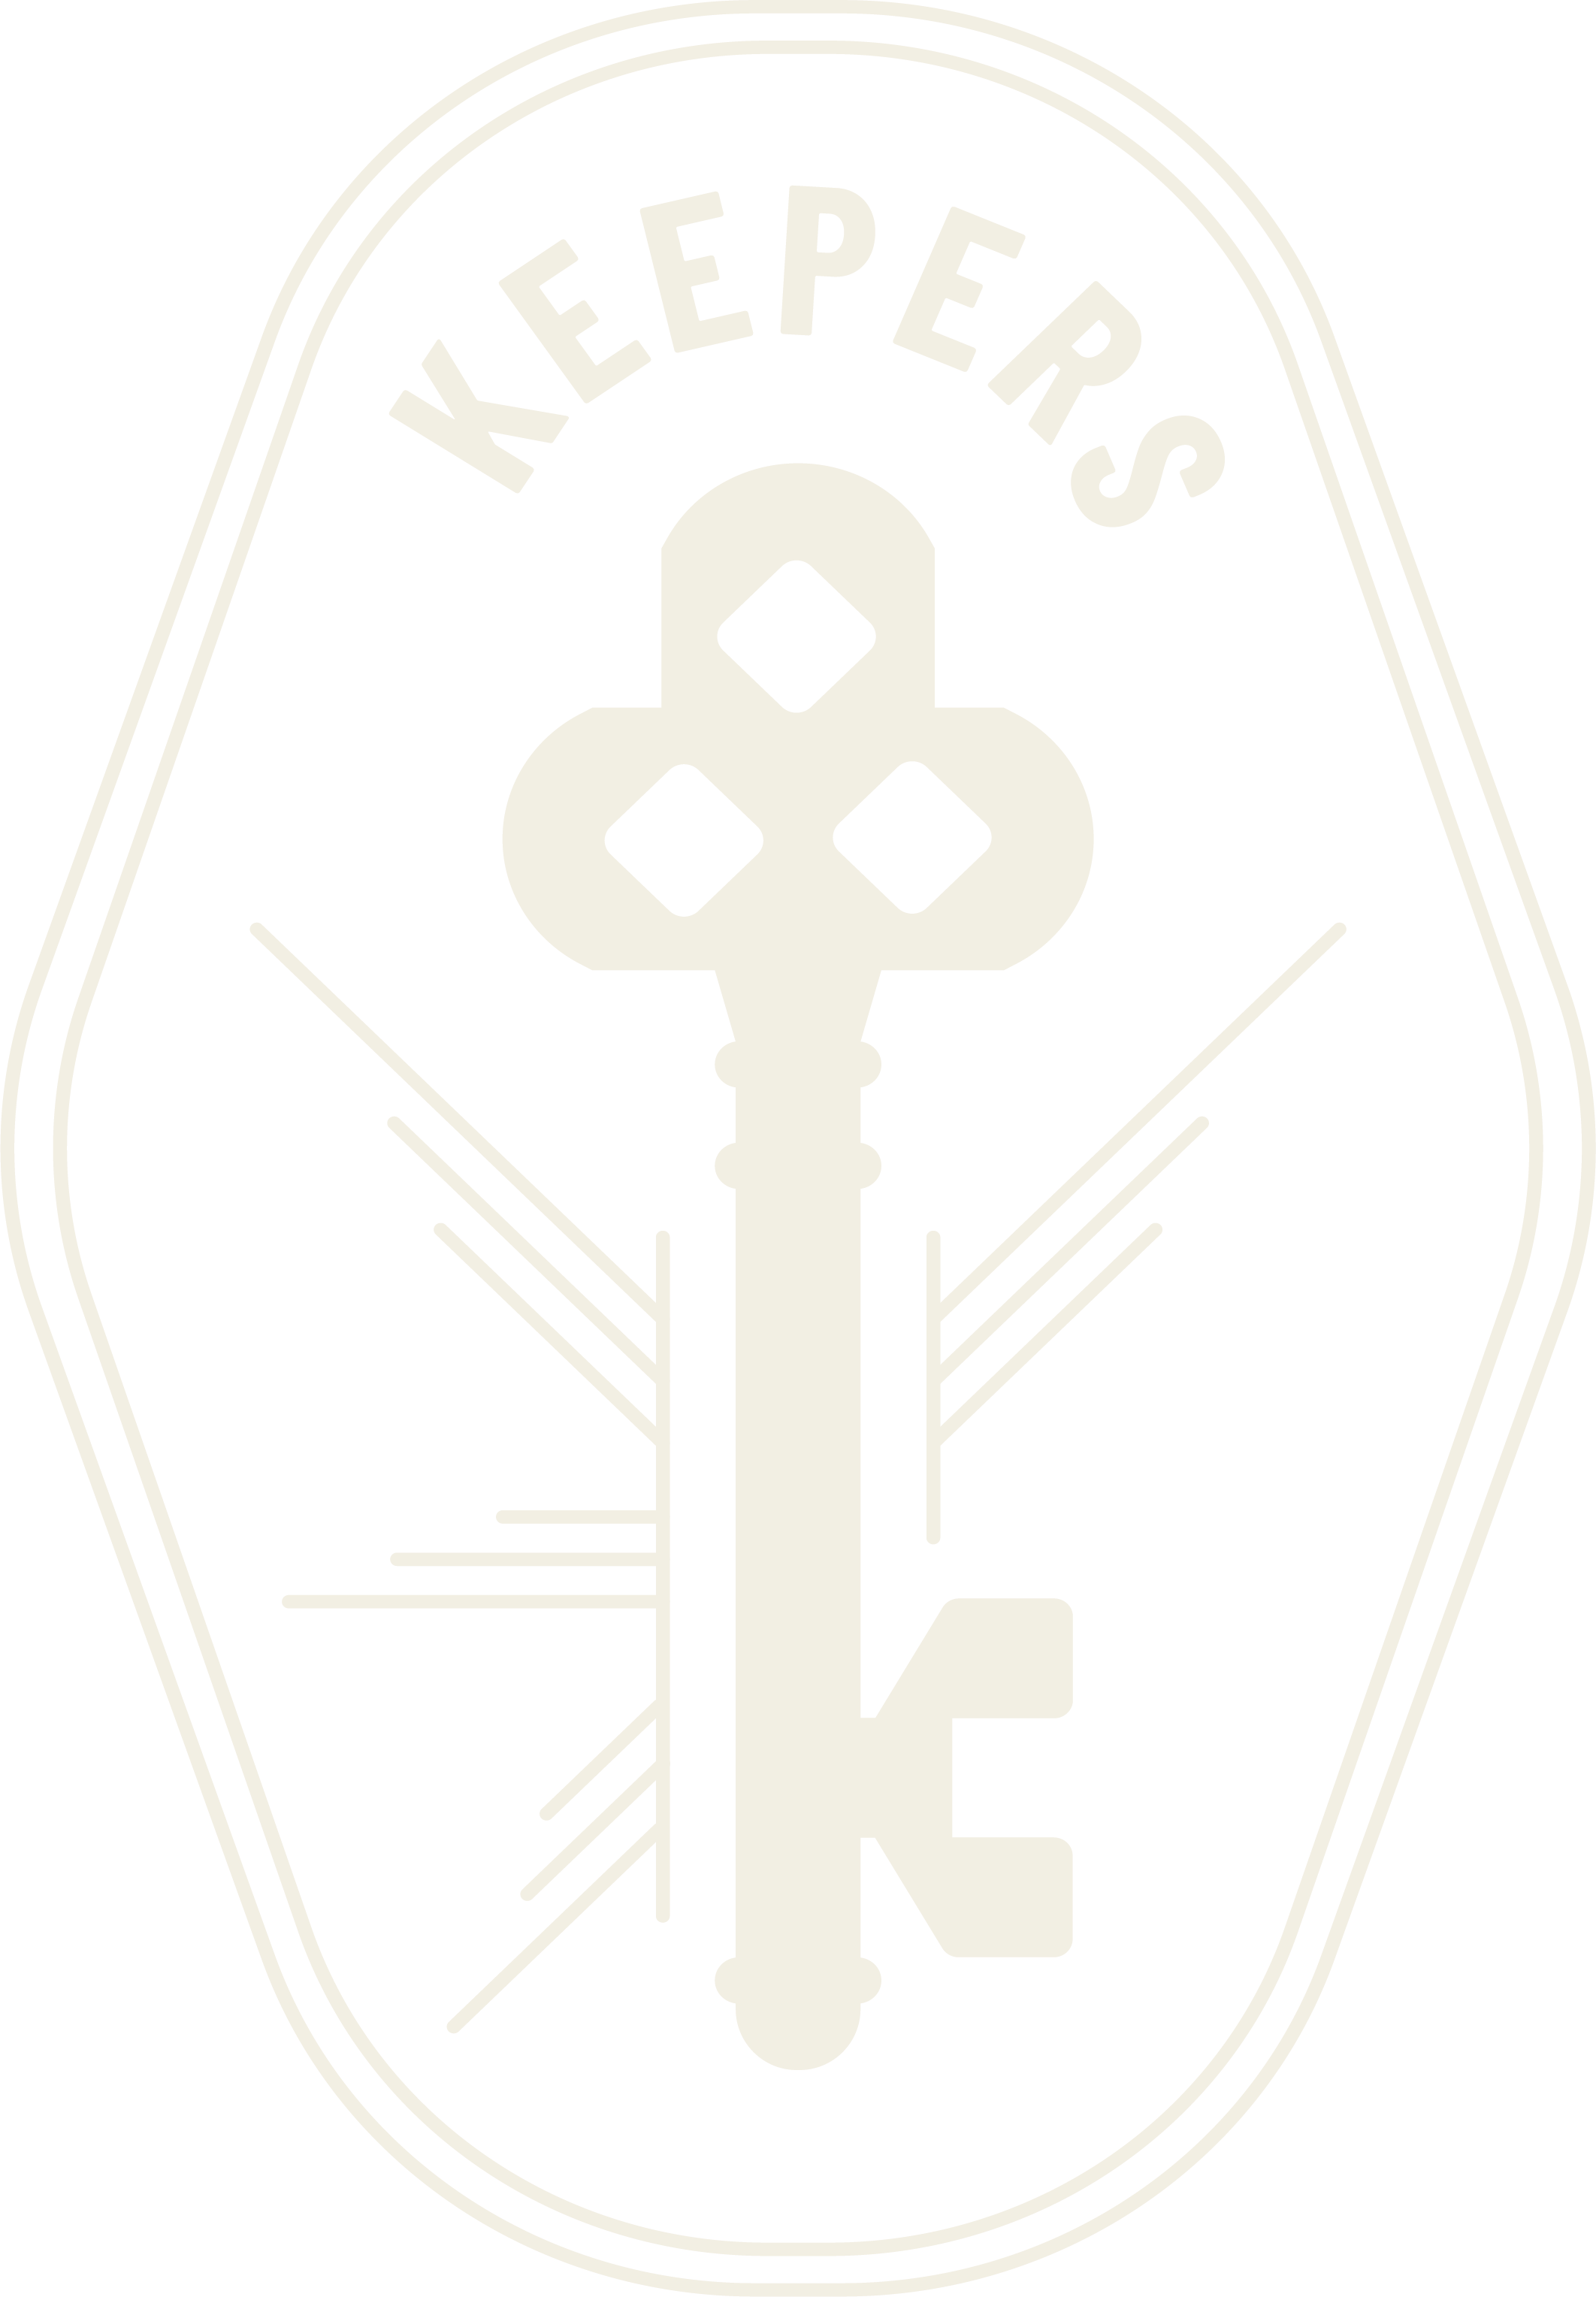 keepers logo